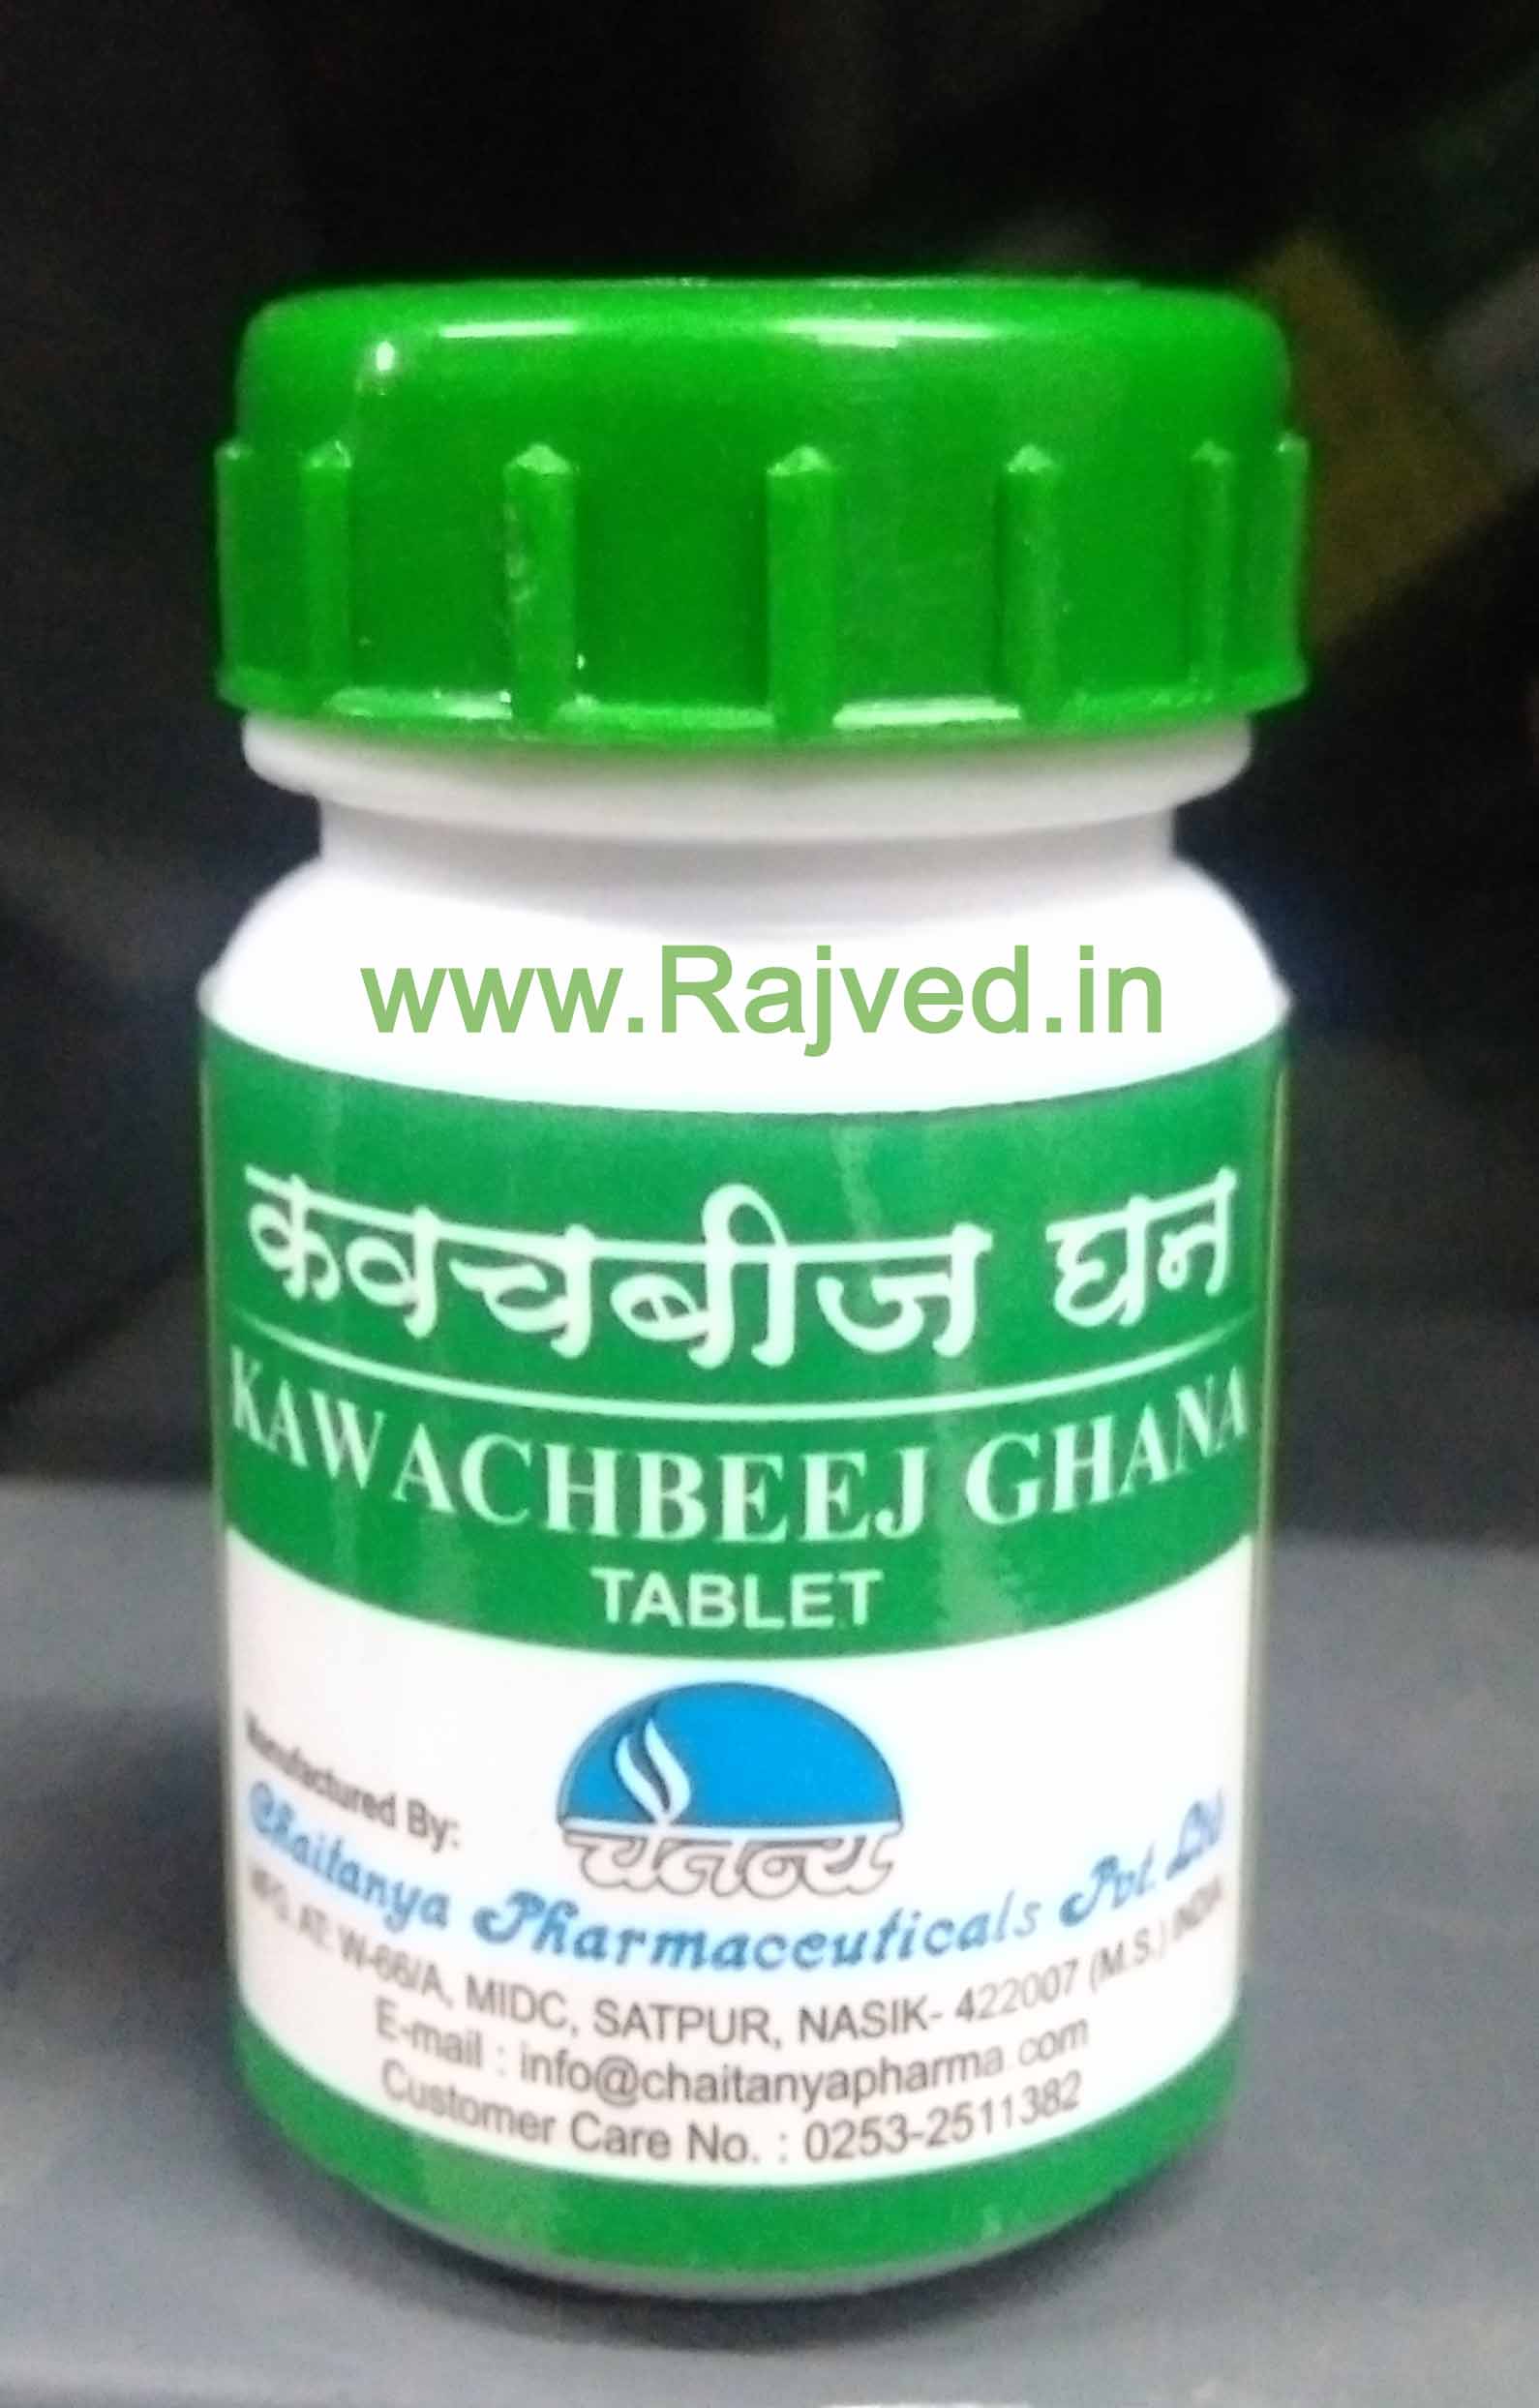 kawachbeej ghana 2000tab upto 20% off free shipping chaitanya pharmaceuticals